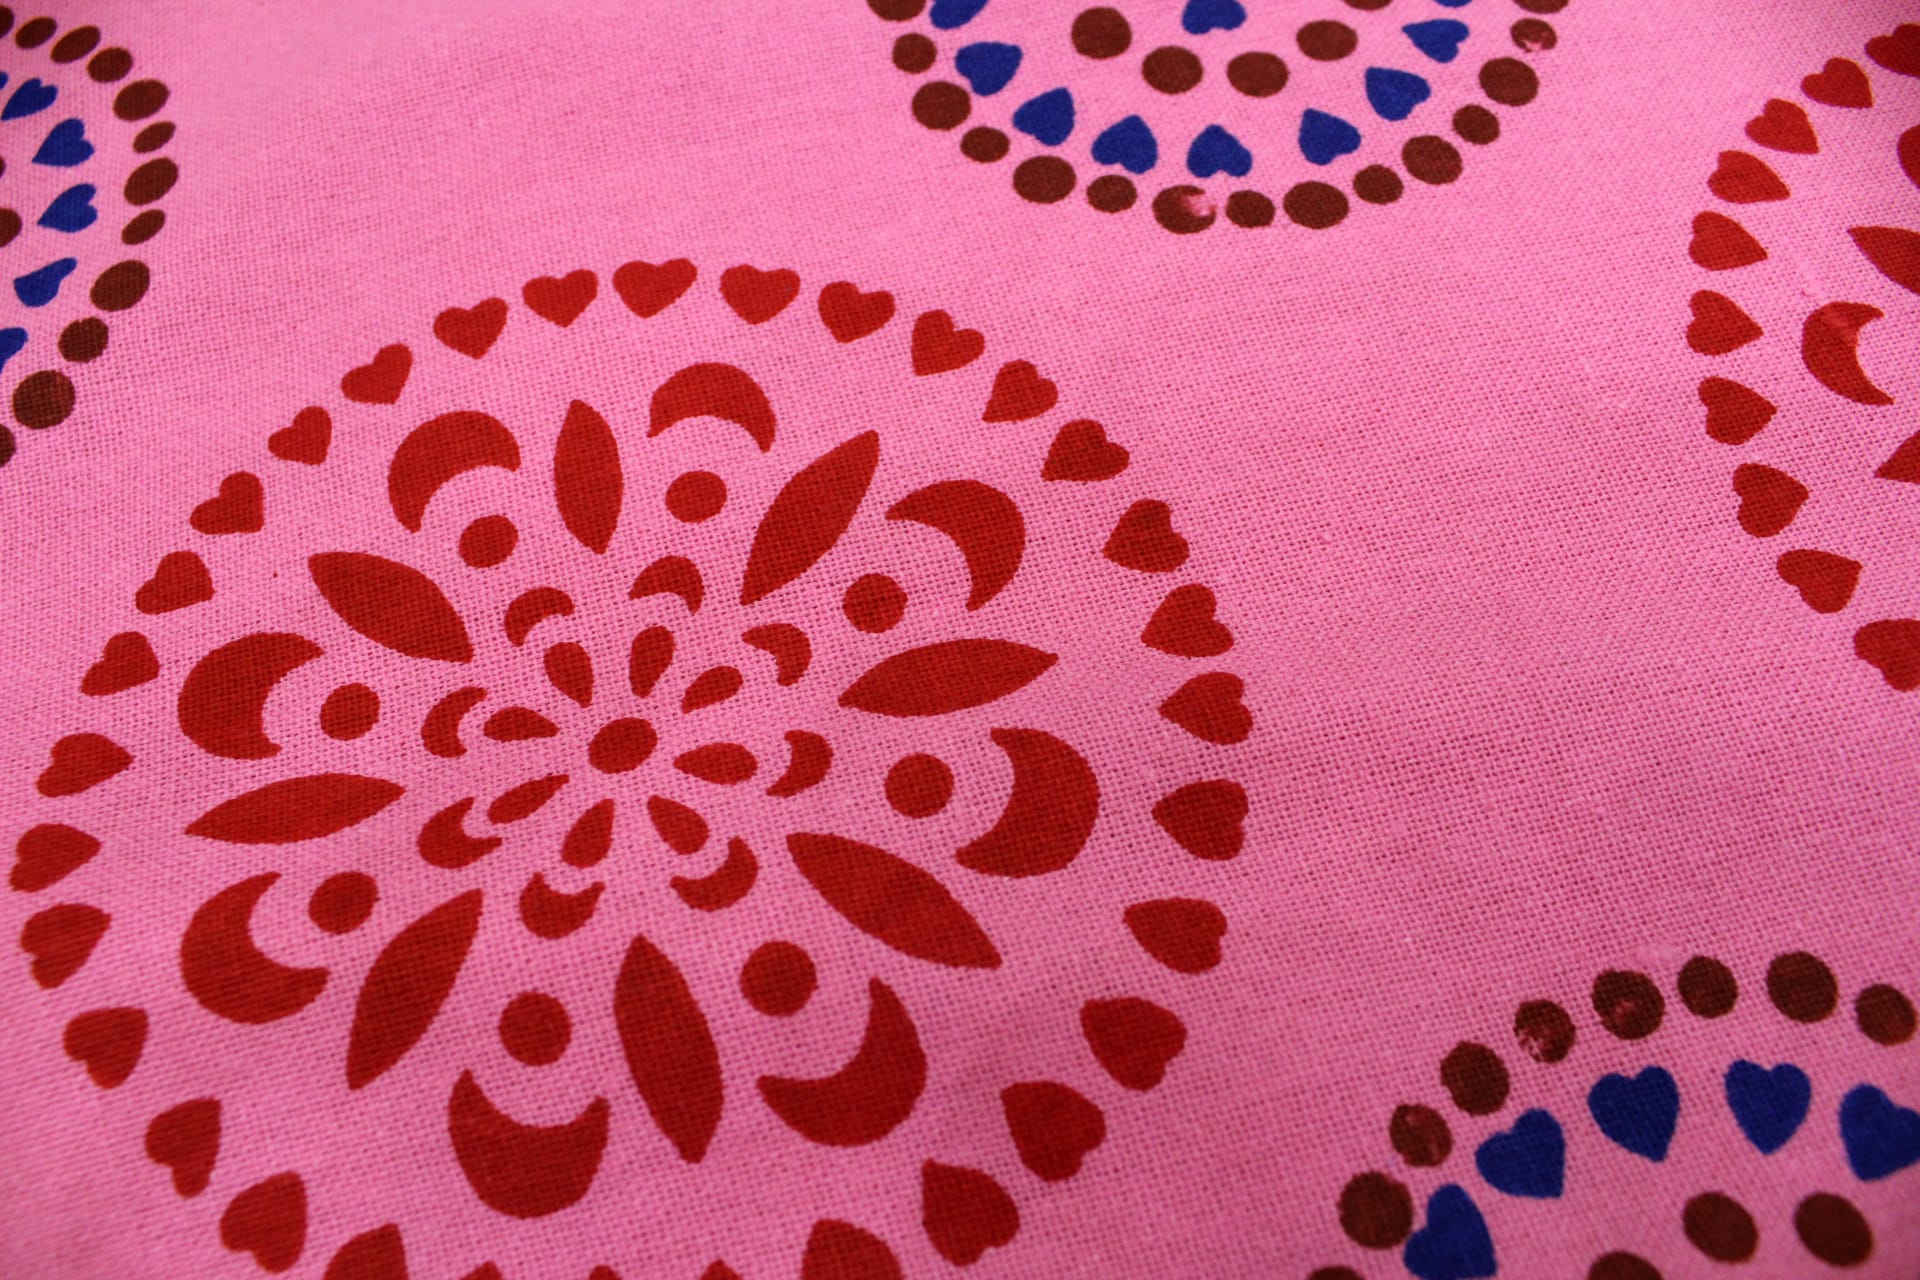 Designer Pink Printed Festive Colors Diwan Set(6 Pcs) online in India 